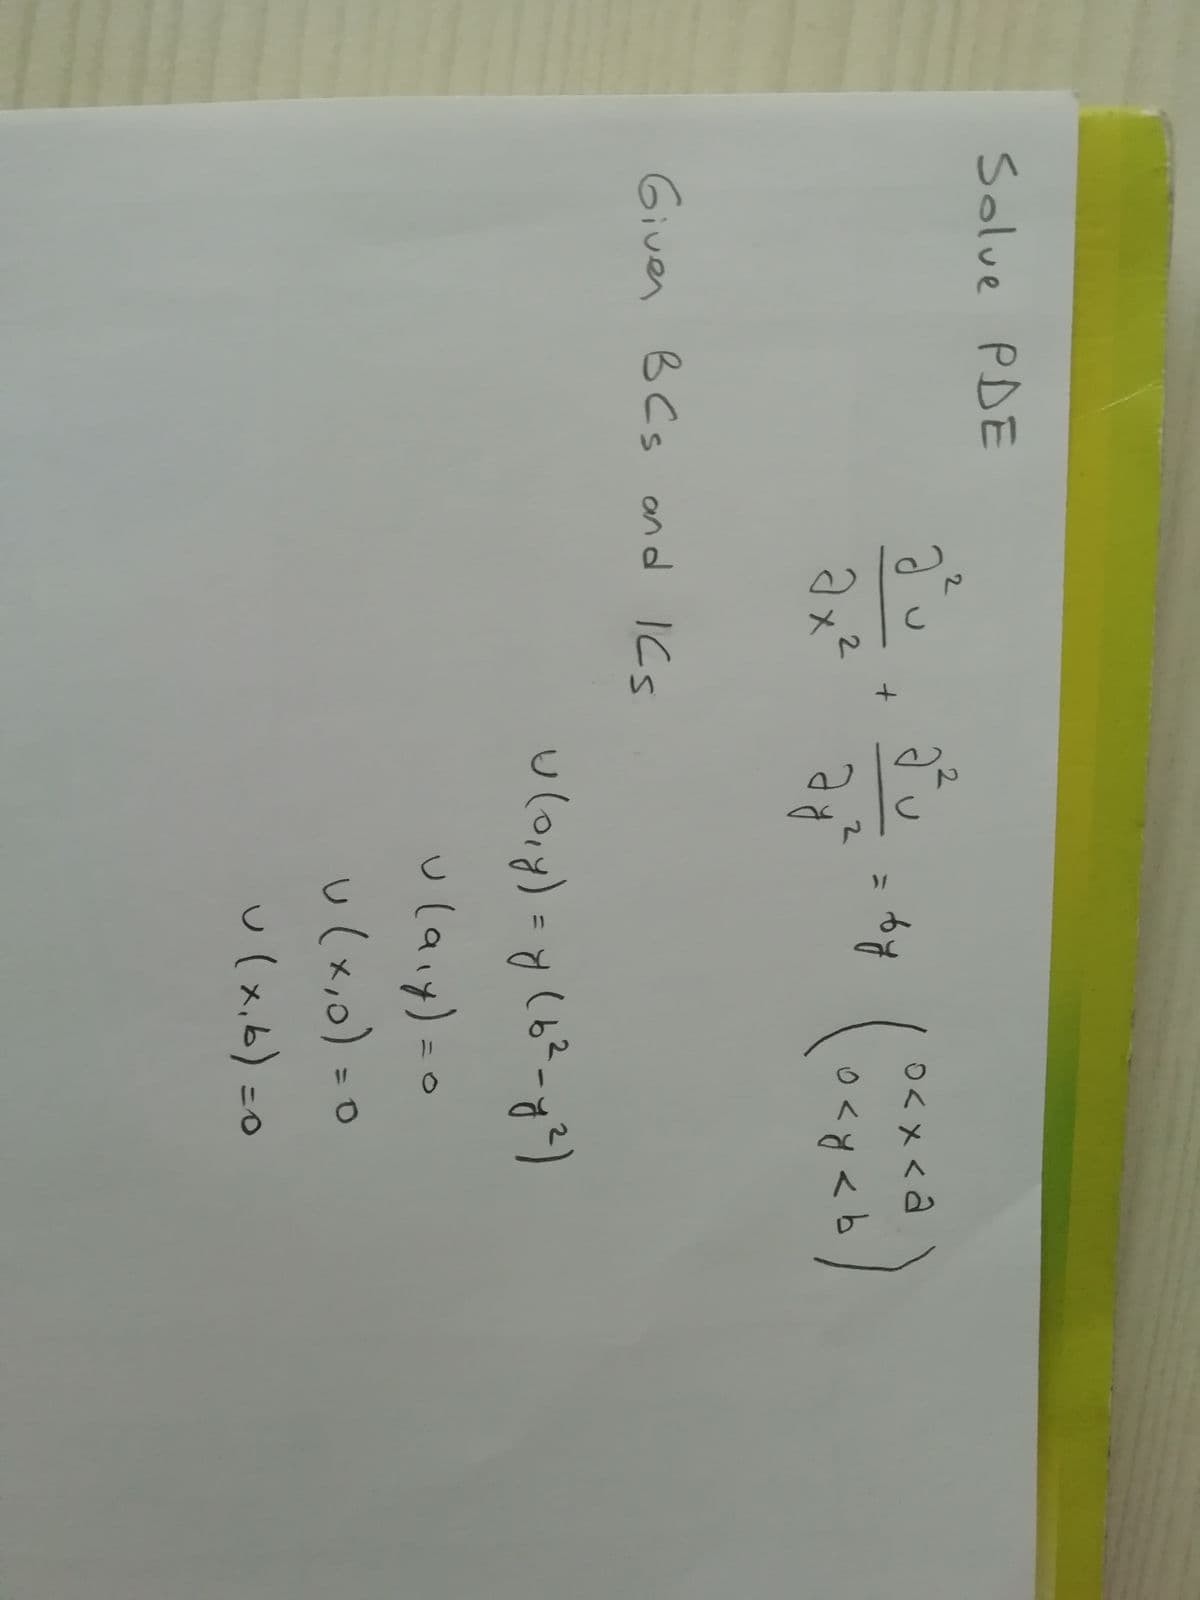 Solue
Solue PDE
2.
O<x < a
Əx²
Given B Cs ond ICs
ulory) =y(6?-g?)
%3D
ulaiy)=o
u(x,o) = 0
u(x,b) =0
